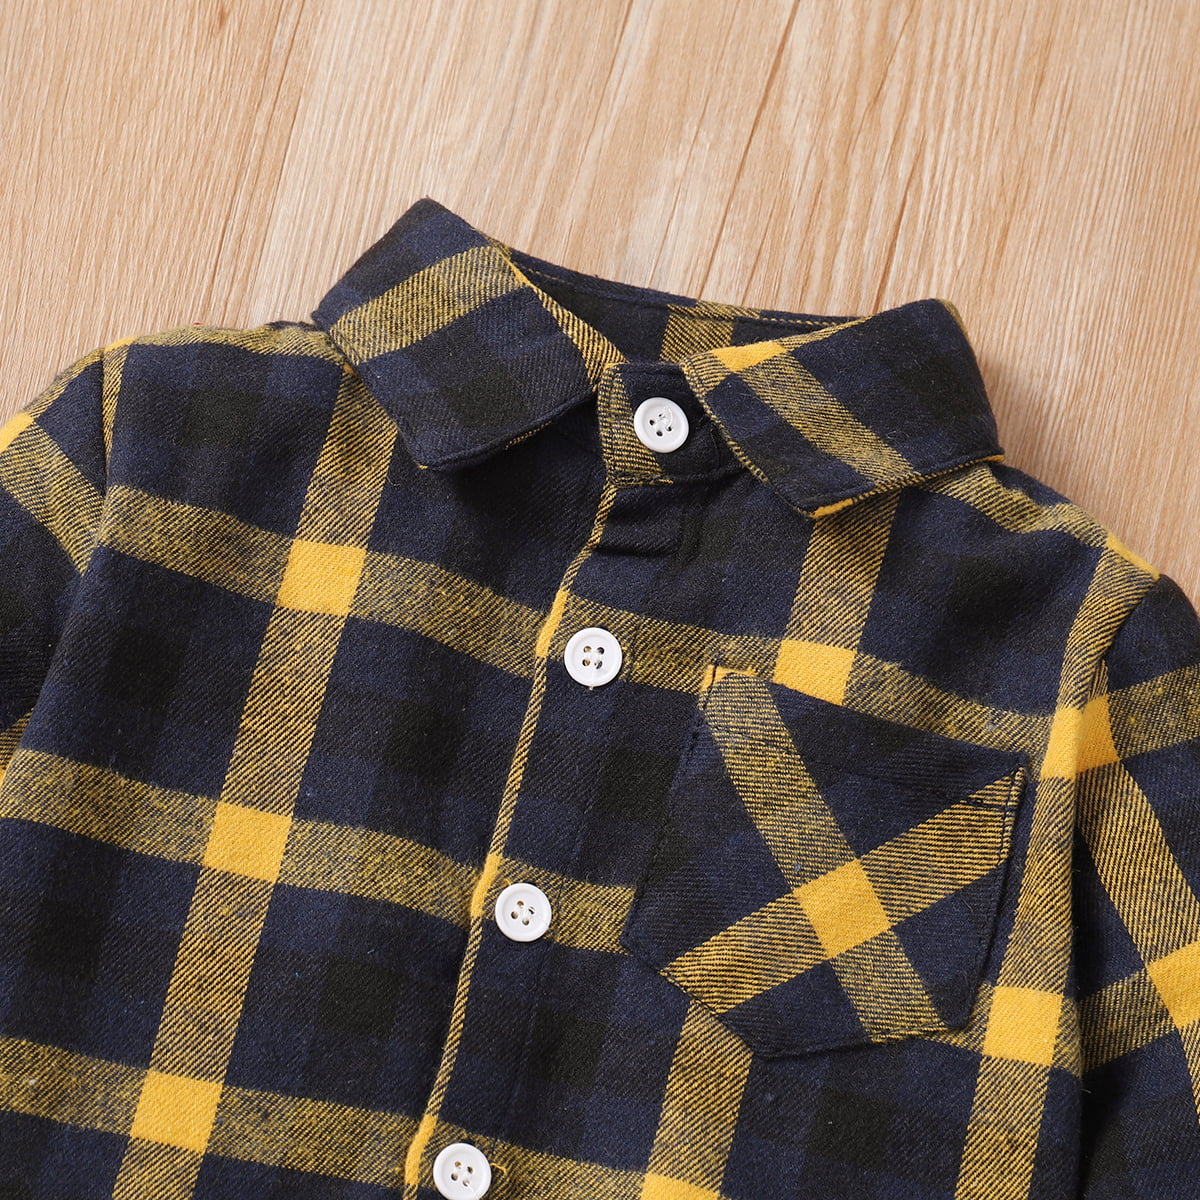 2-piece Toddler Boy Button Design Long-sleeve Plaid Shirt and Ripped Denim Jeans Set